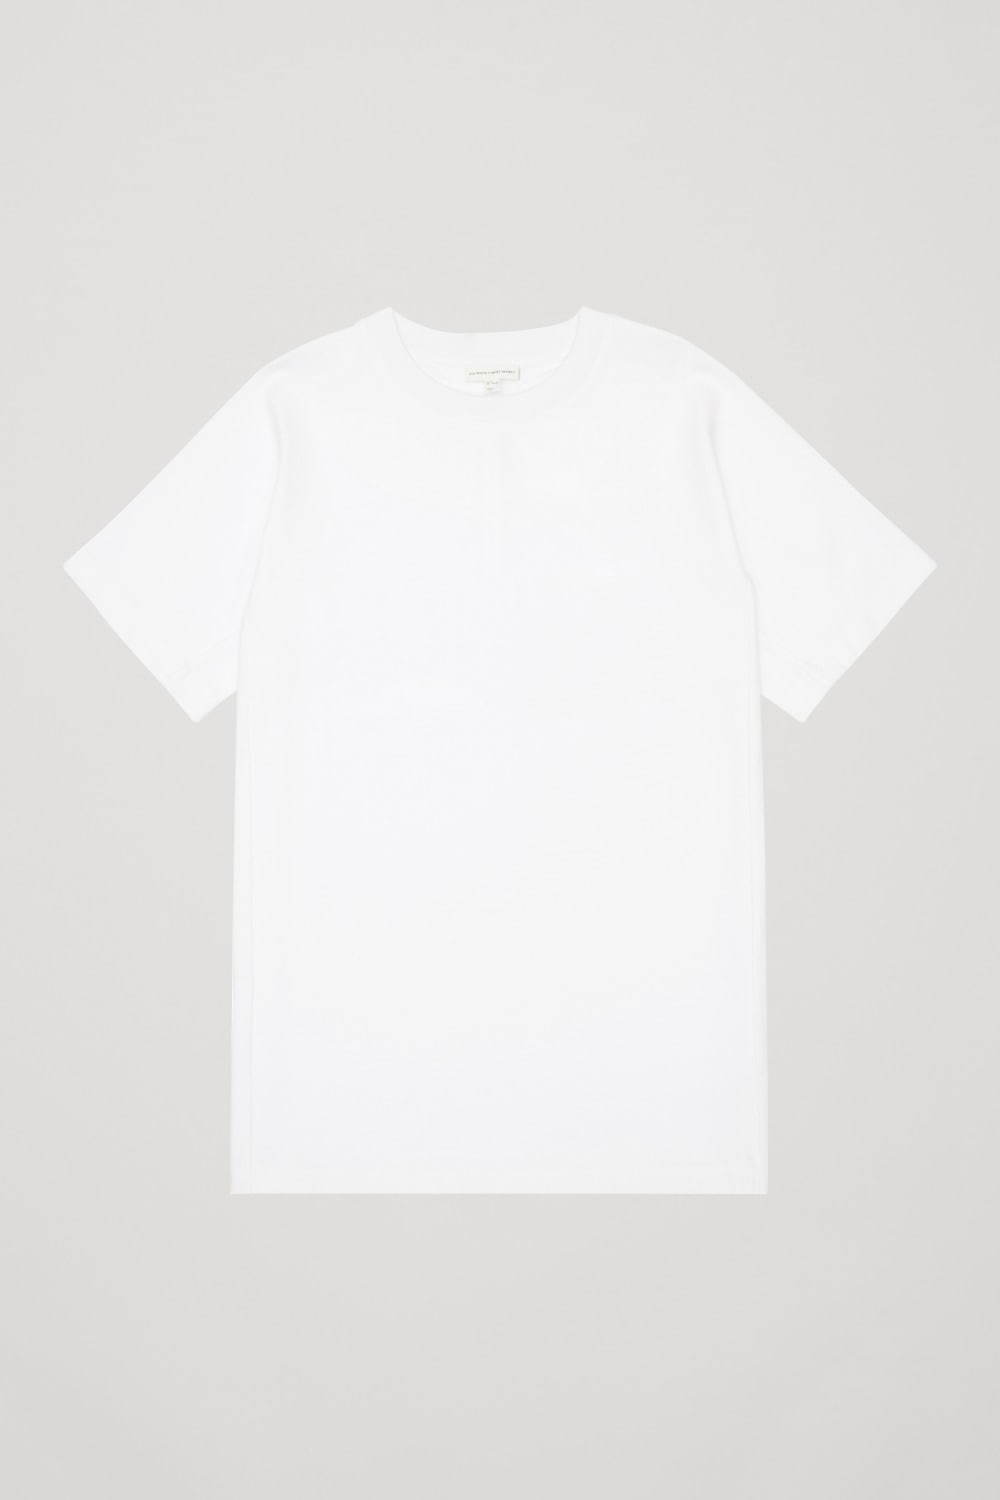 Cos 白t に特化したコレクション ホワイト Tシャツ プロジェクト メンズ ウィメンズ全7型 ファッションプレス